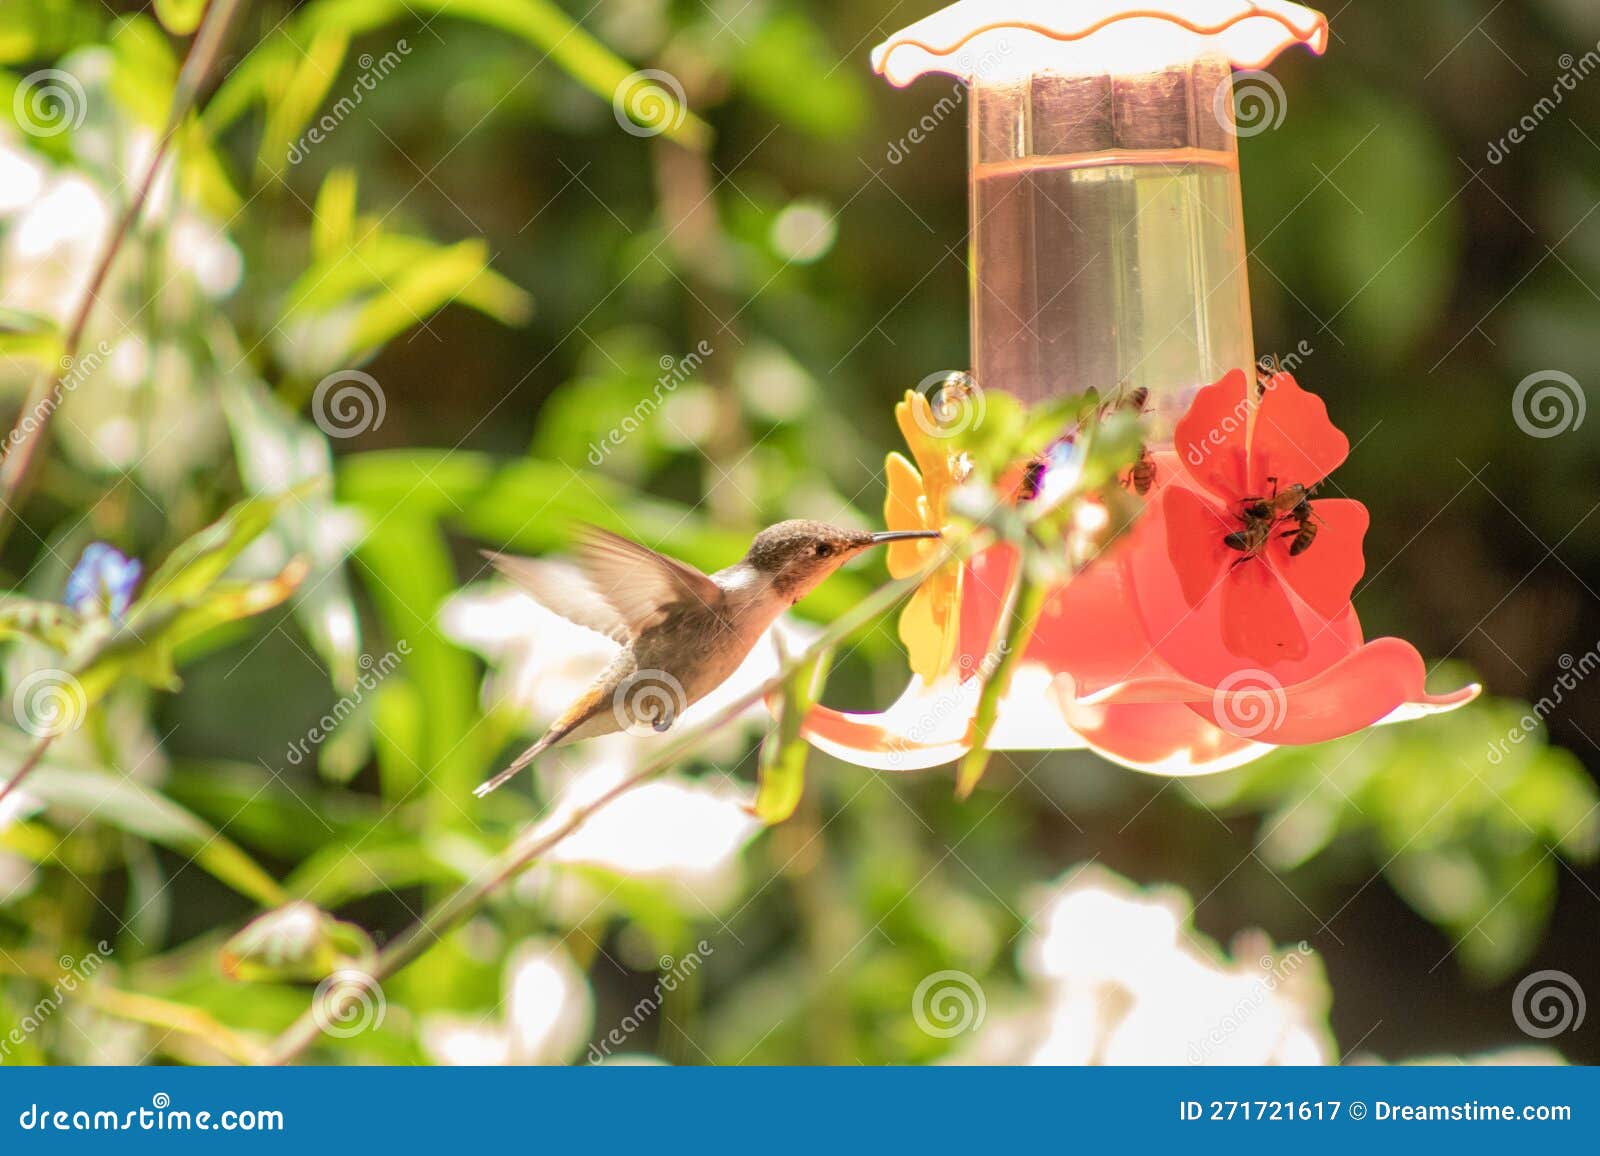 arica hummingbird